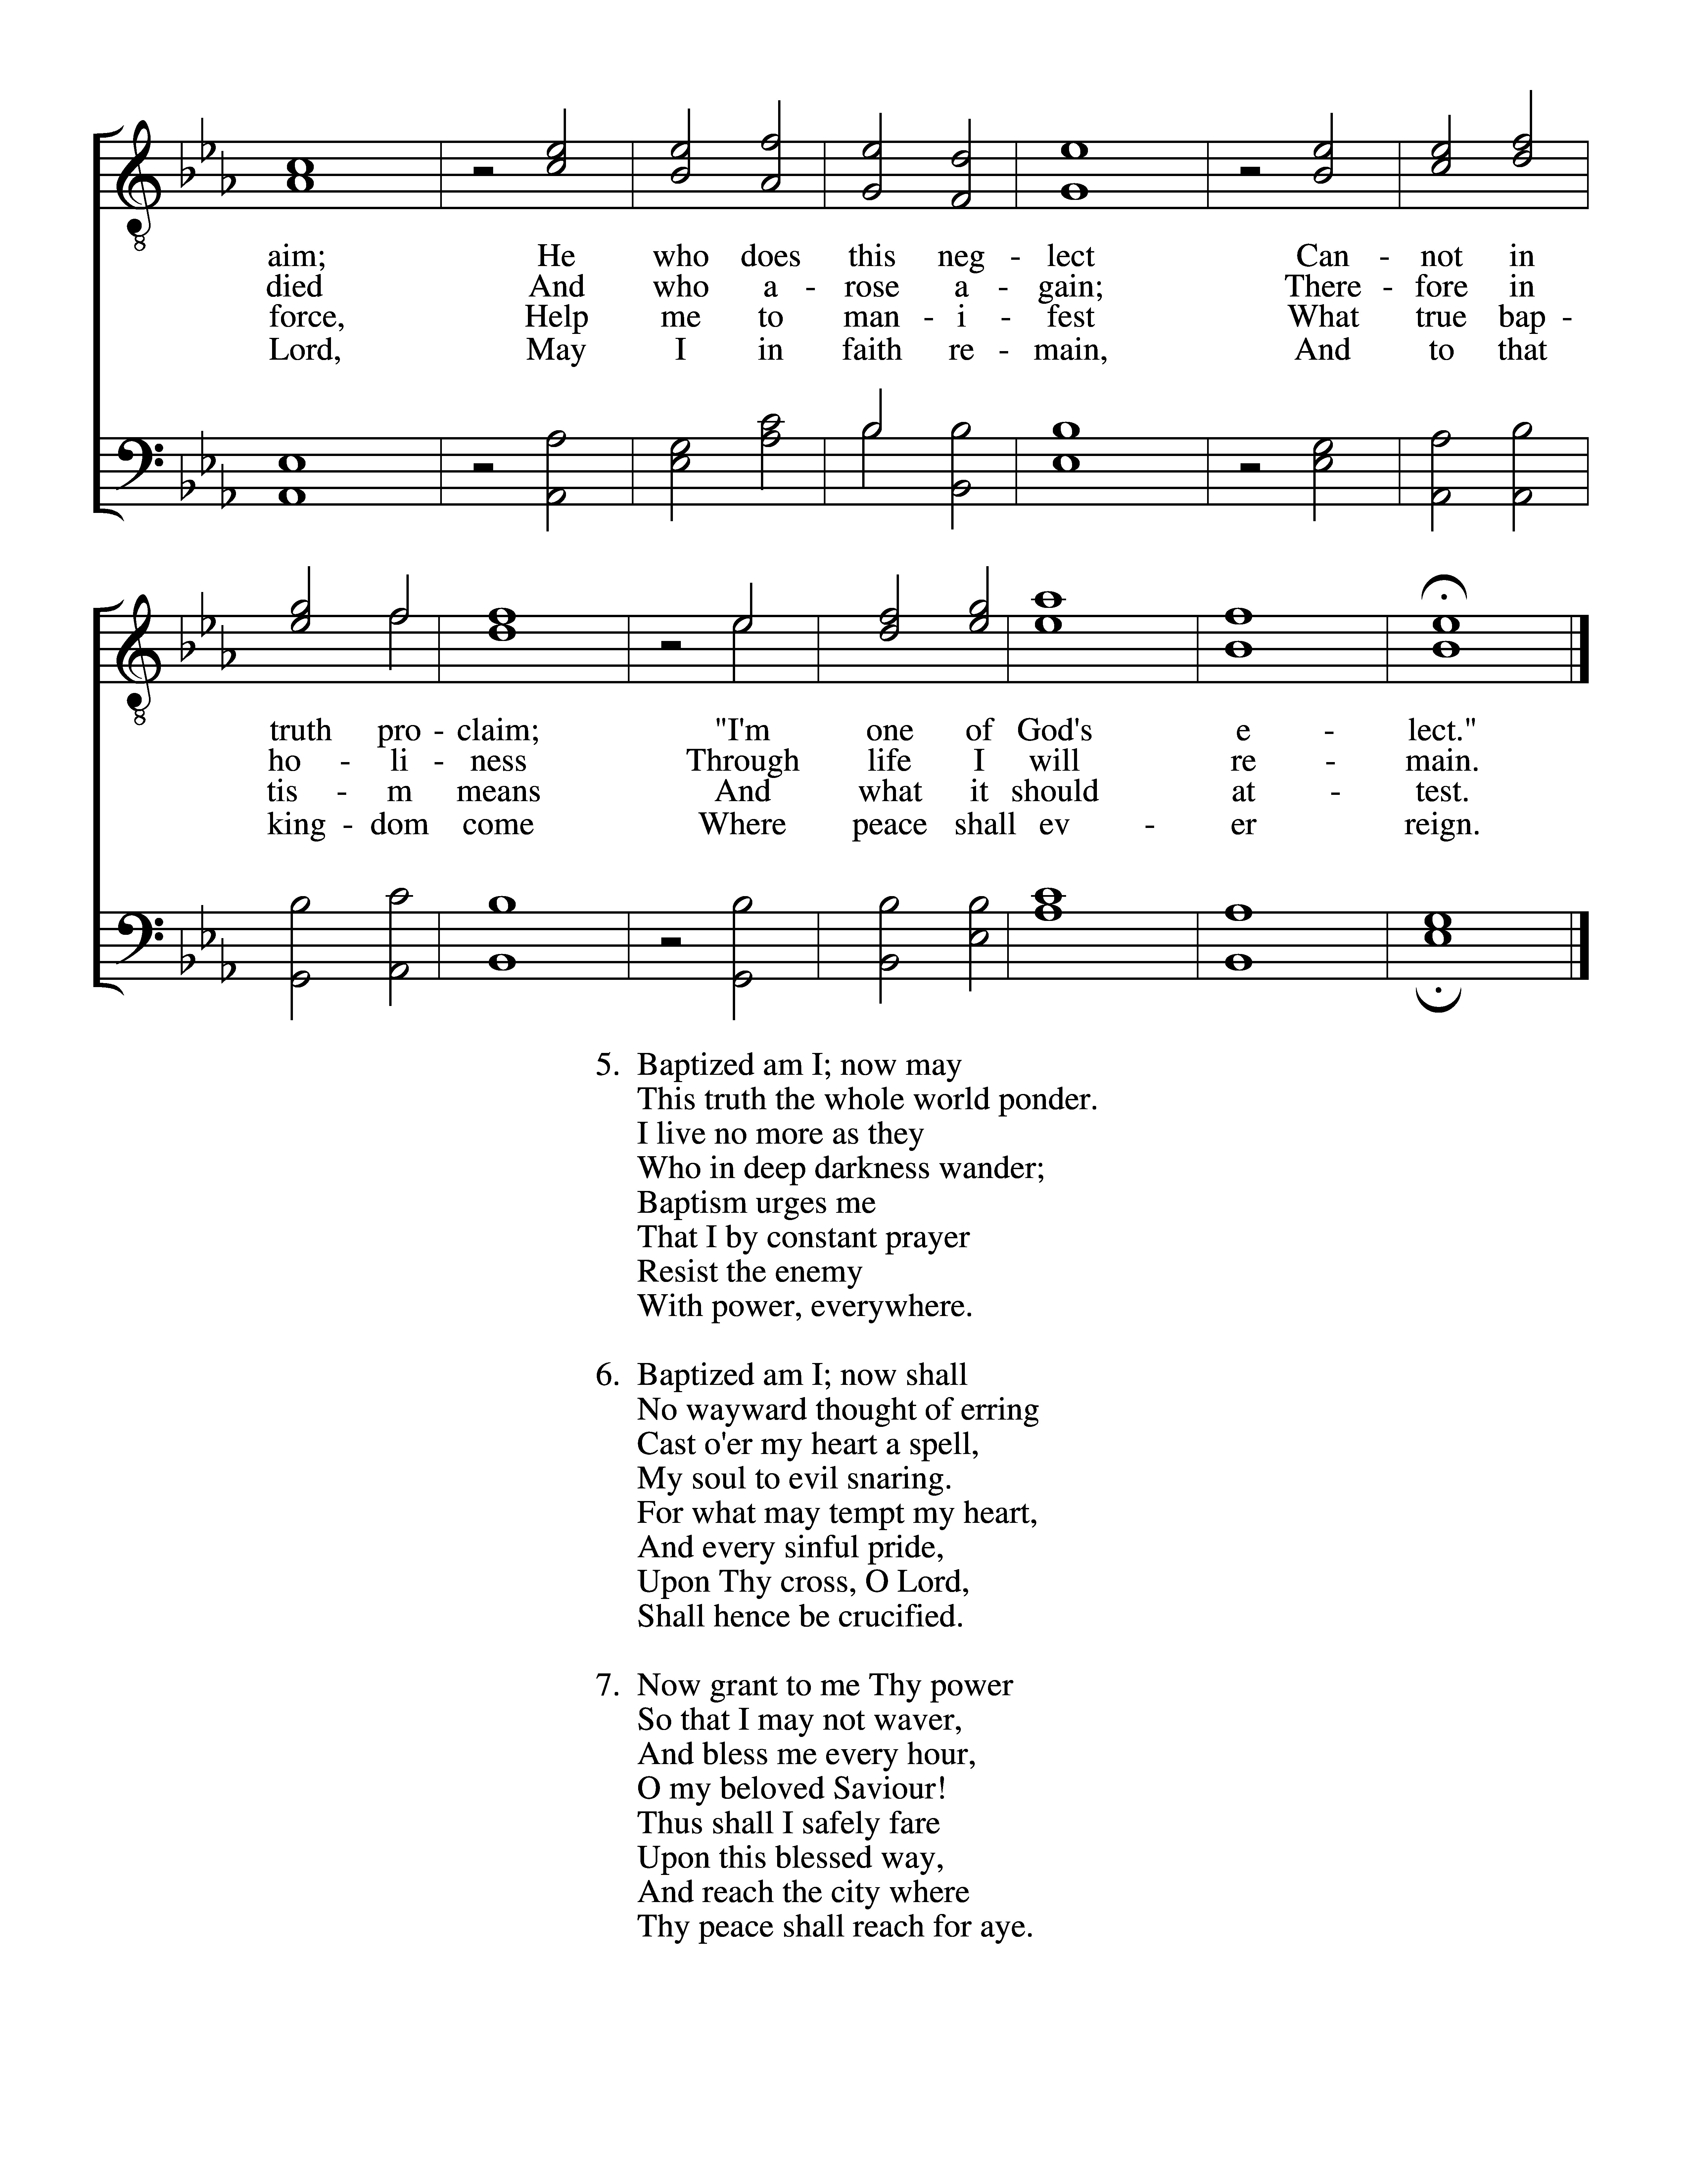 Baptismal Hymn page 2